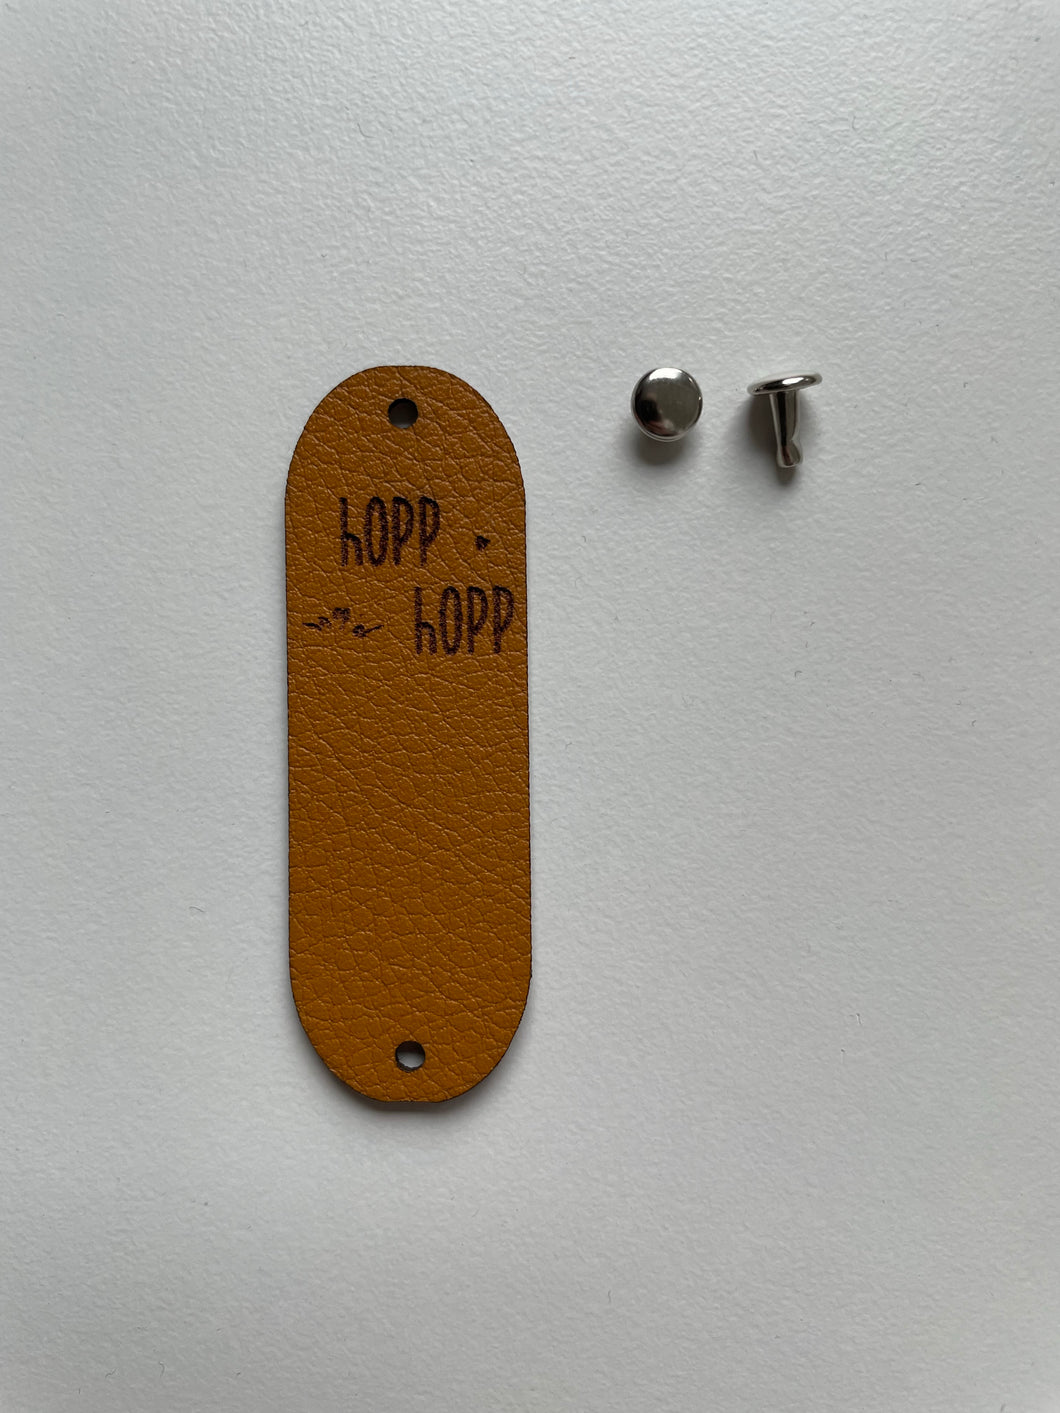 Hopp Hopp Knick Label